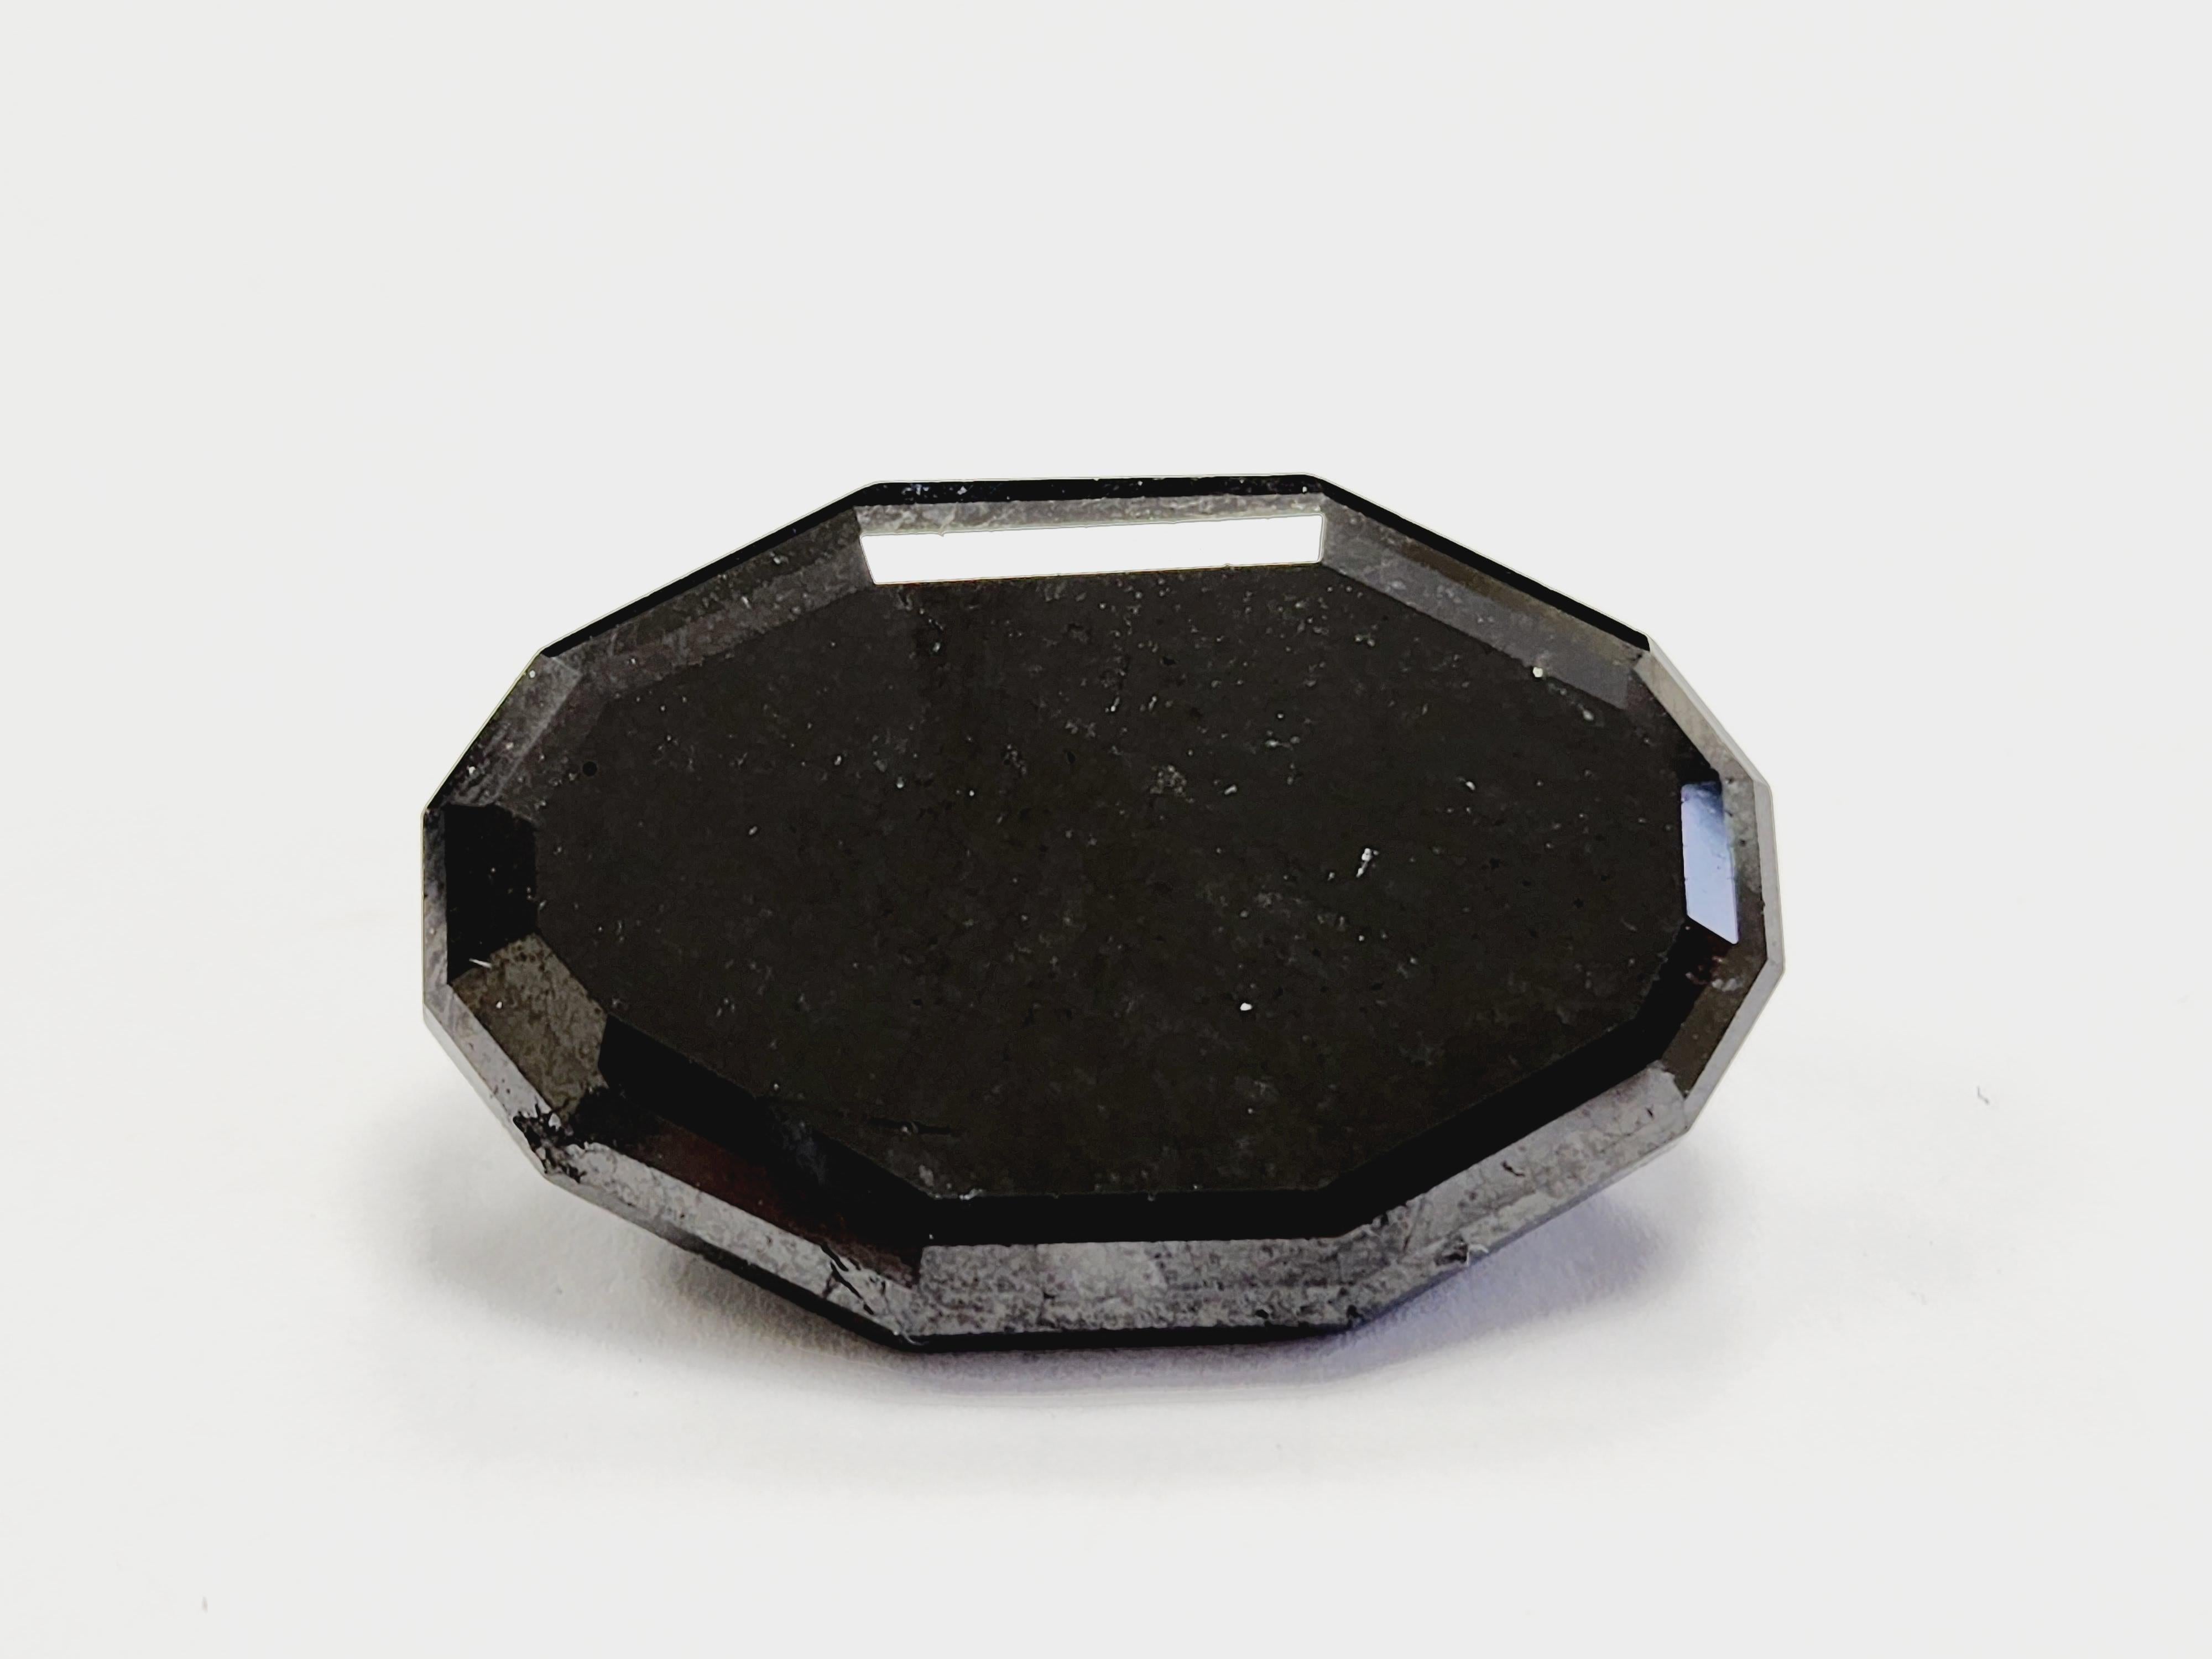 GIA 33.79 Carat Fancy Black Oval Shape Loose Diamond
Treated Color